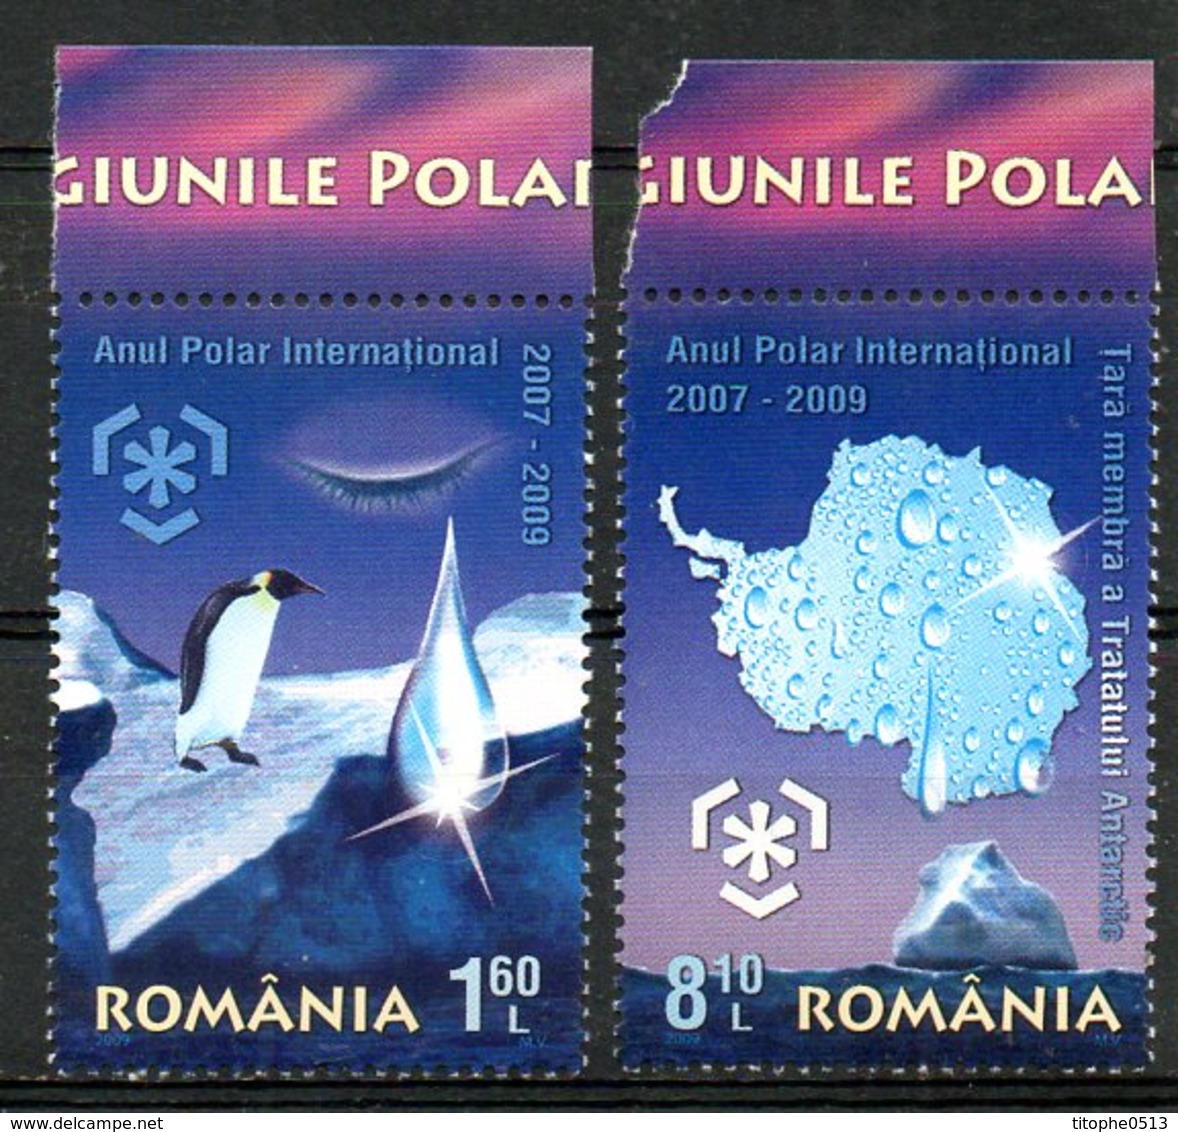 ROUMANIE. N°5399-5400 De 2009. Année Polaire Internationale. - Internationales Polarjahr